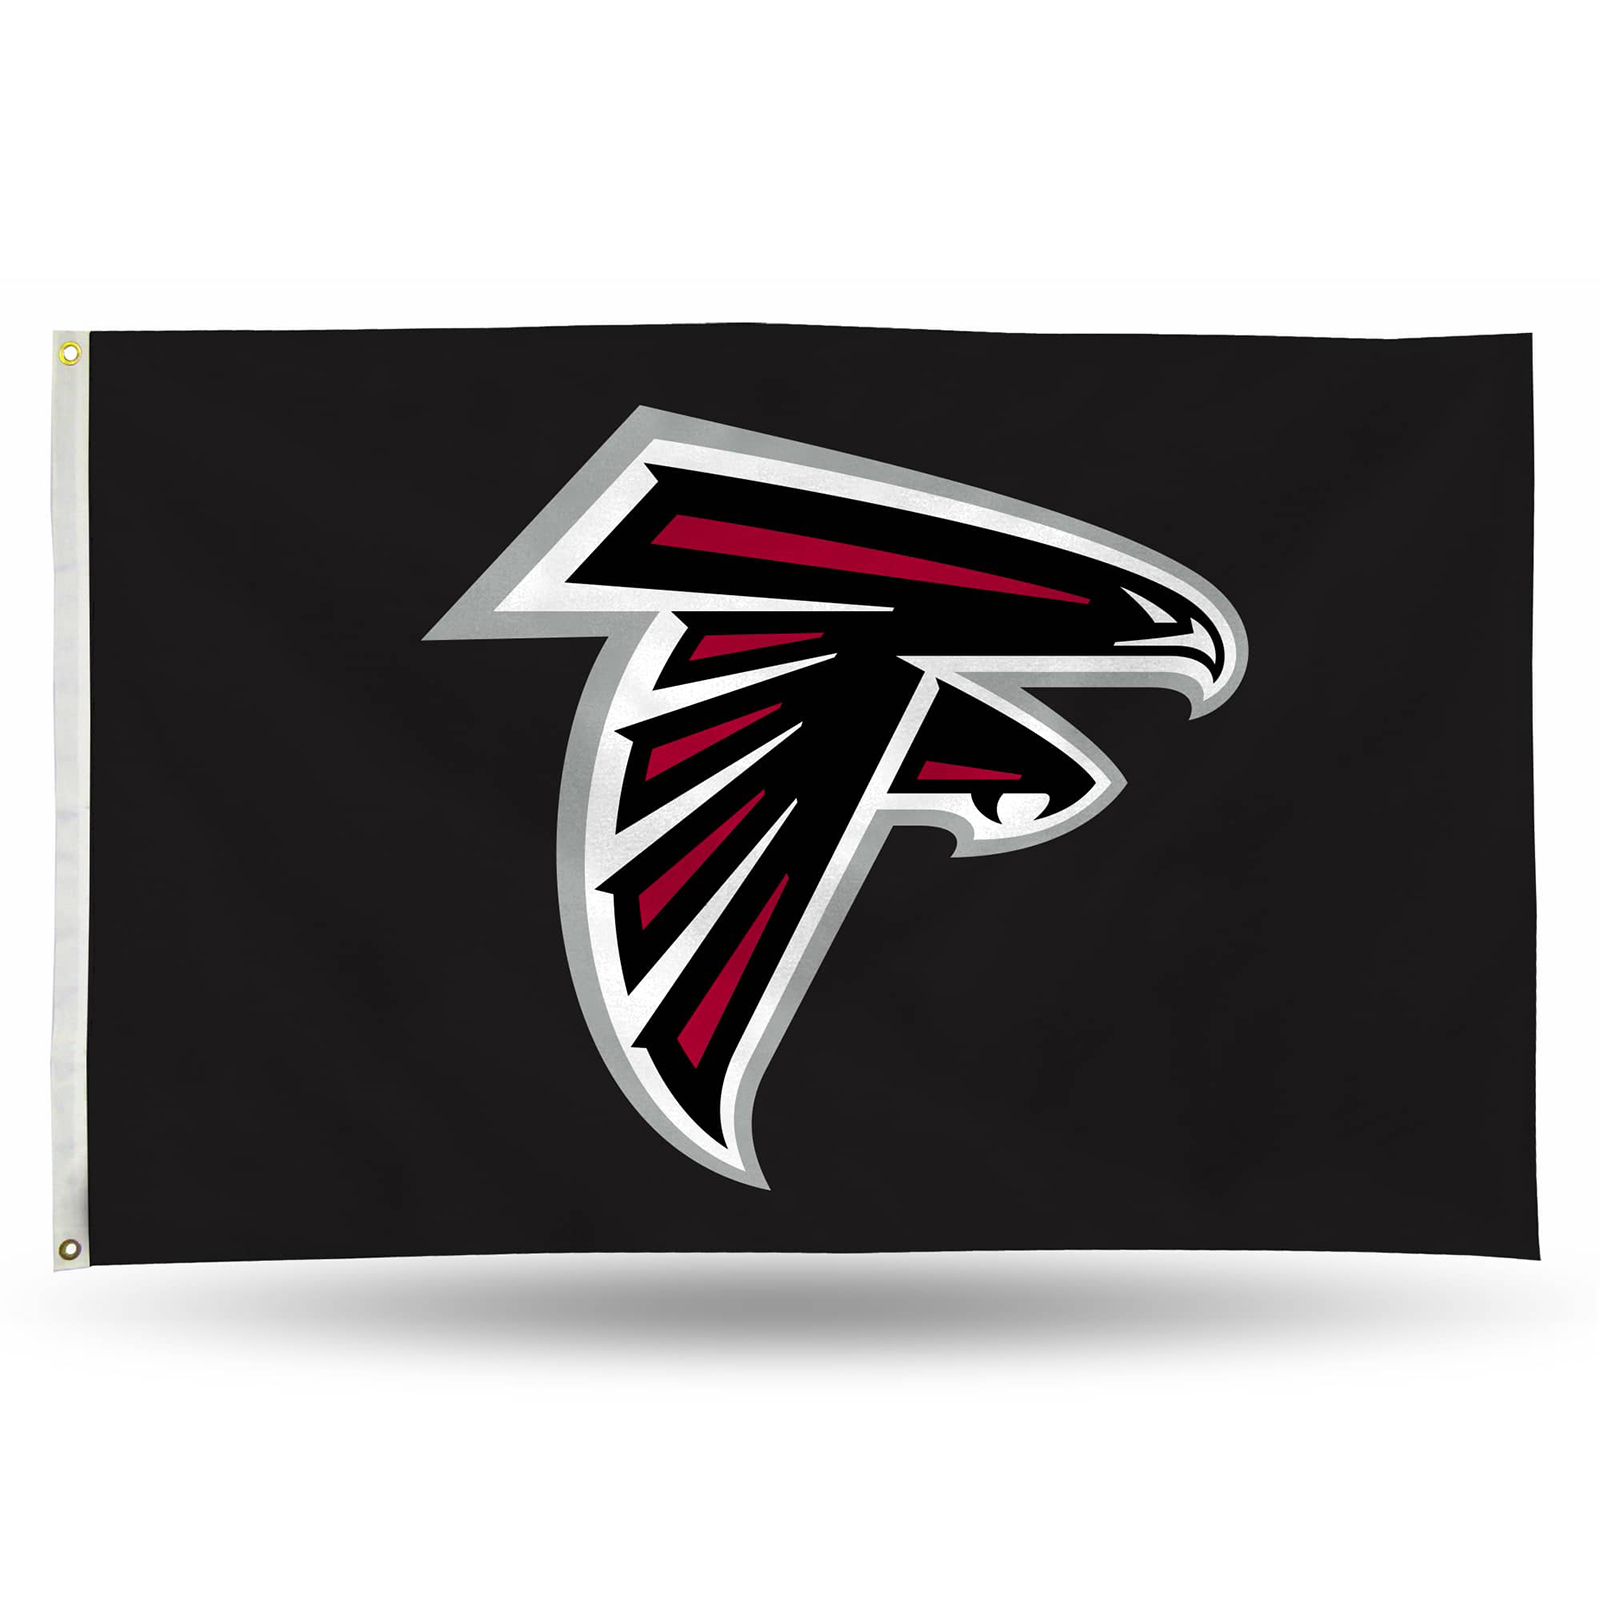 Rico 3' x 5' NFL Atlanta Falcons Banner Flag - Black and Red